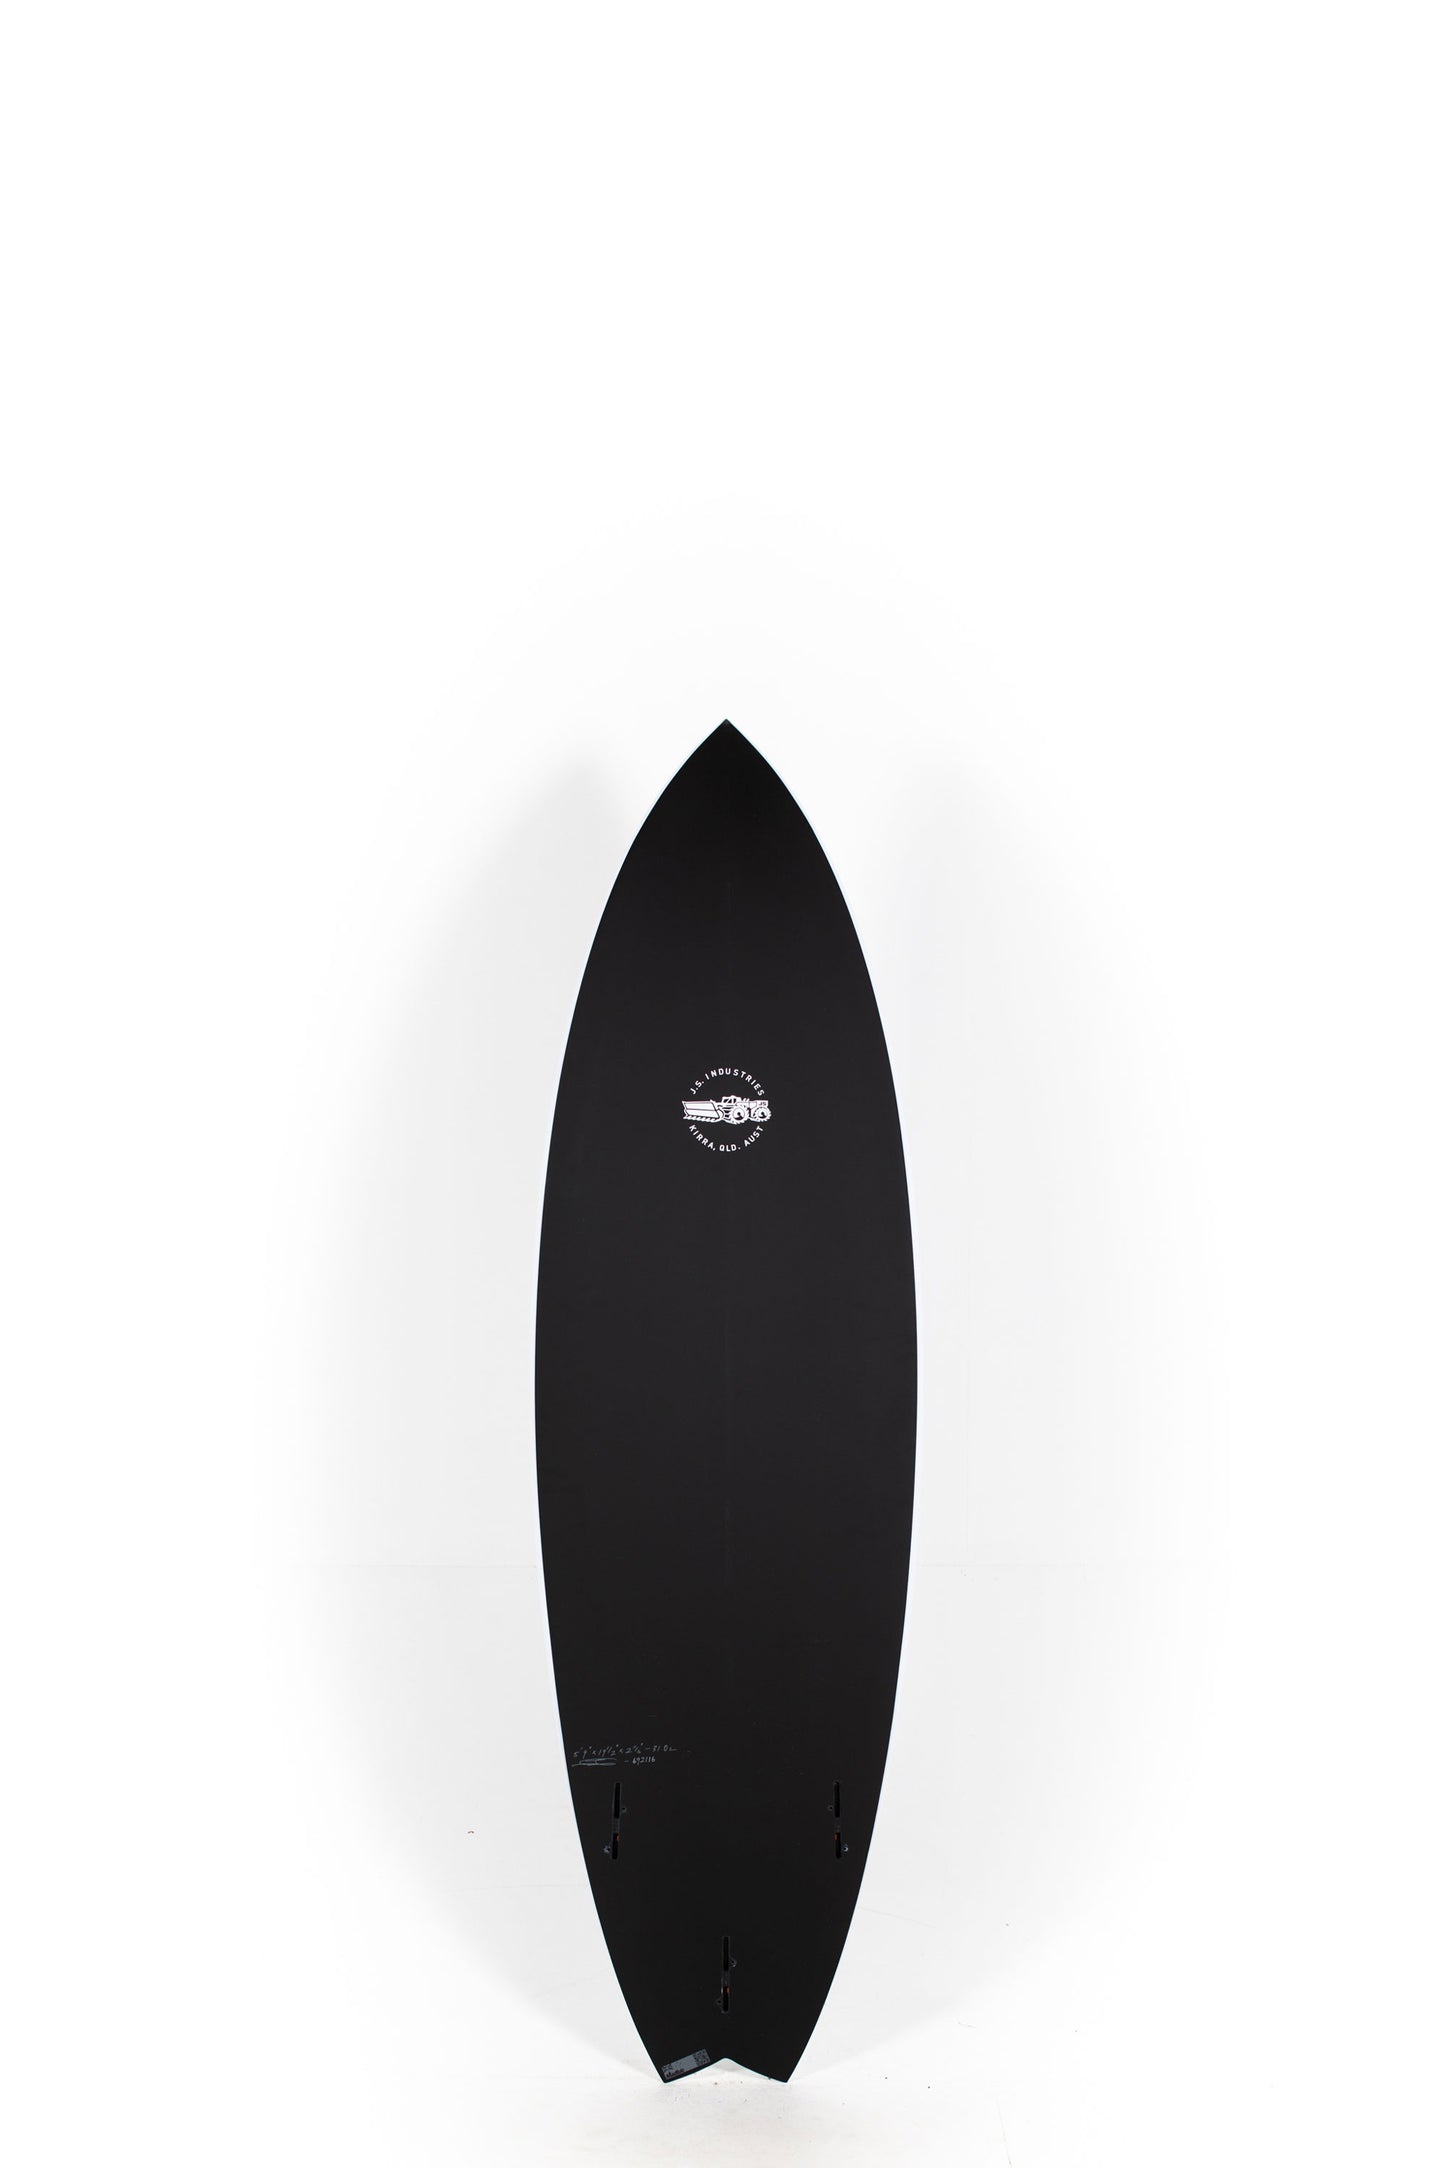 Pukas Surf Shop - JS Surfboards - BLACK BARON 2.1 - 5'9" x 19,5 x 2,69 x 31L - BLACKBARON2.1